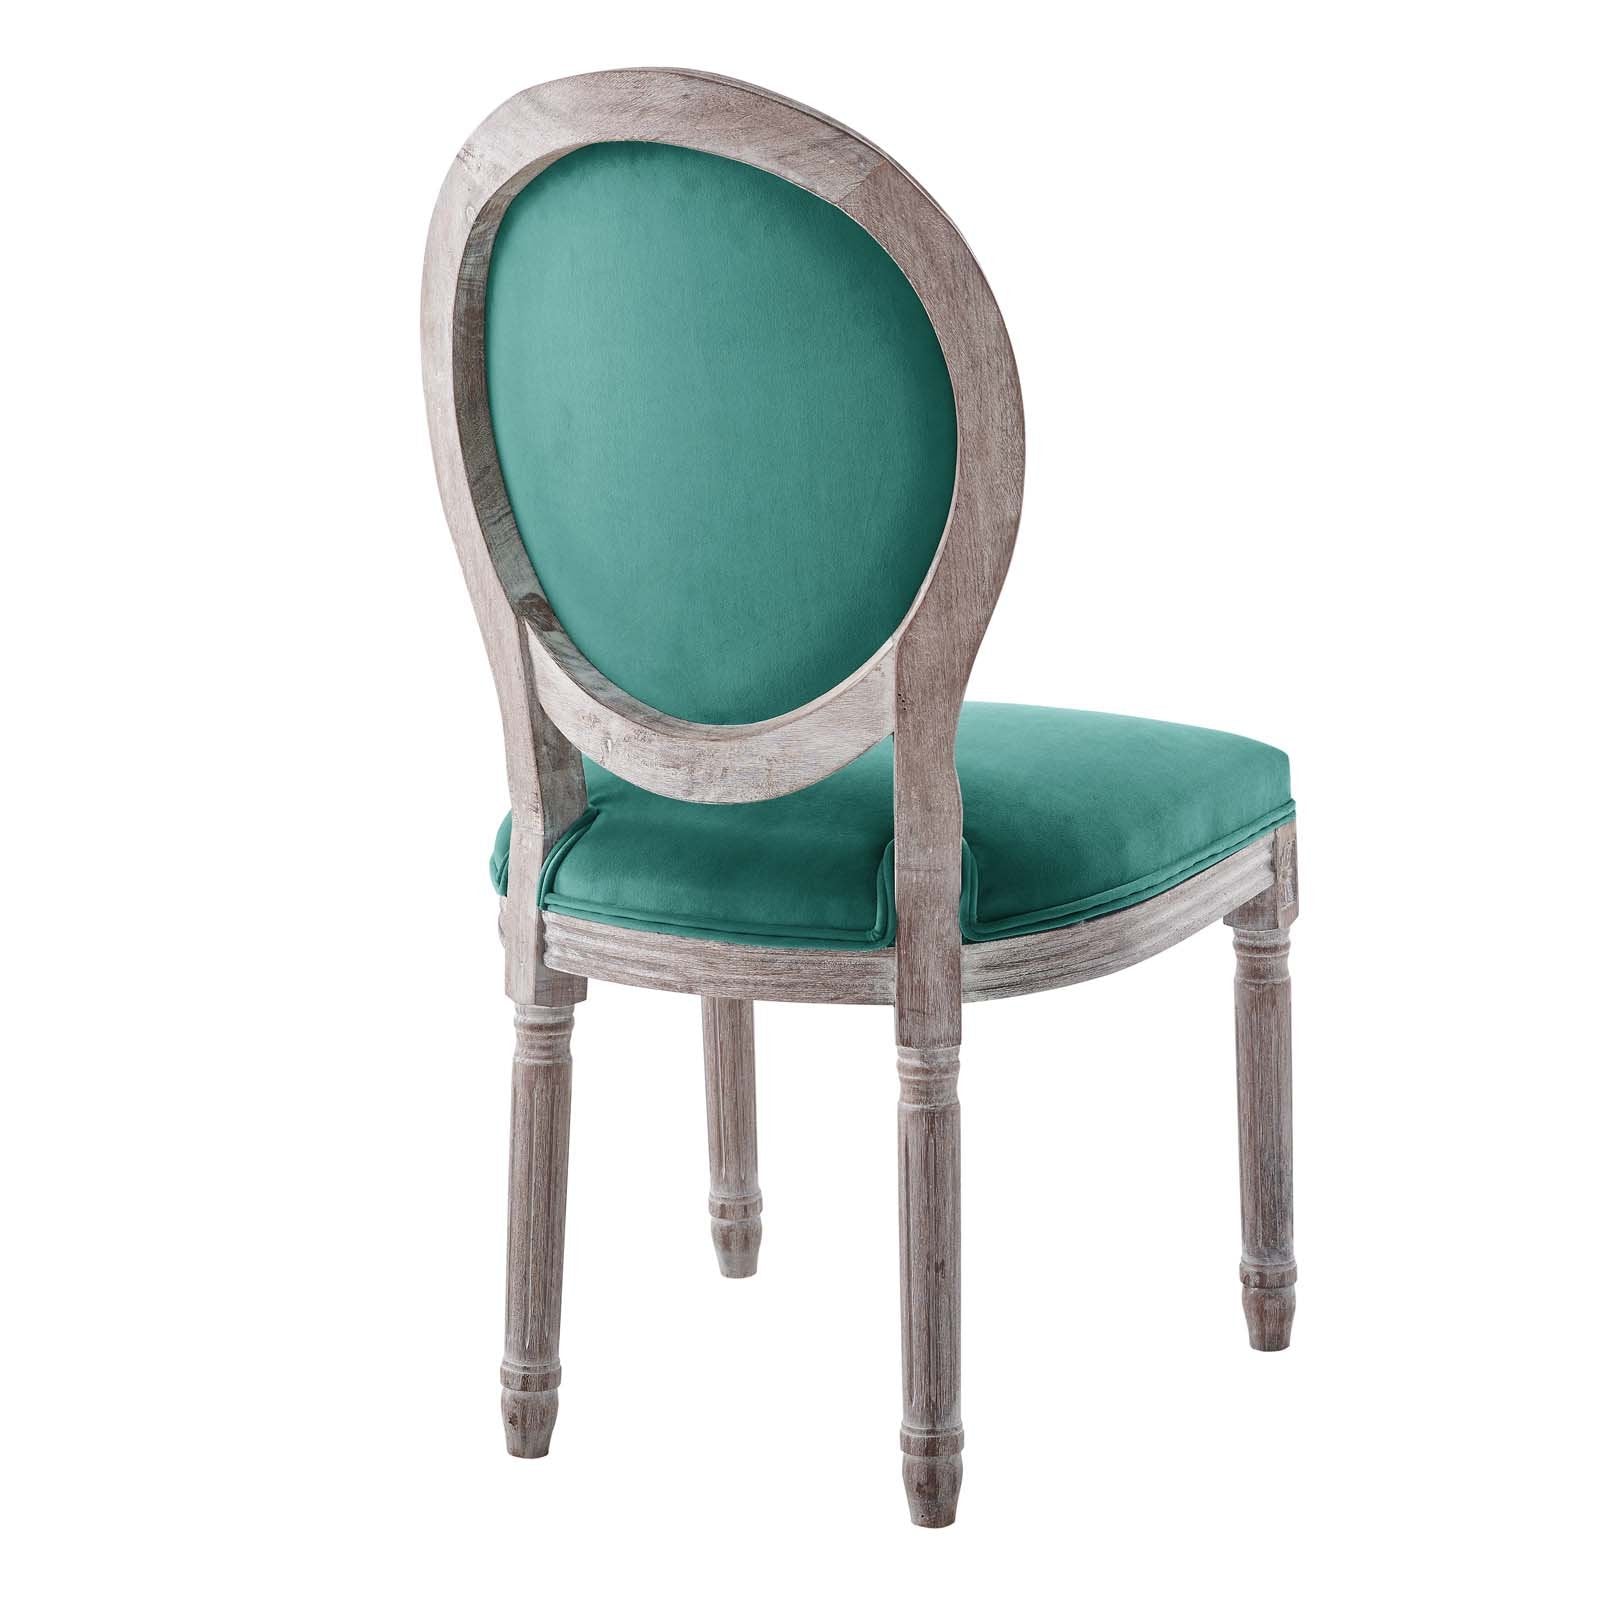 Arise Vintage French Performance Velvet Dining Side Chair - East Shore Modern Home Furnishings